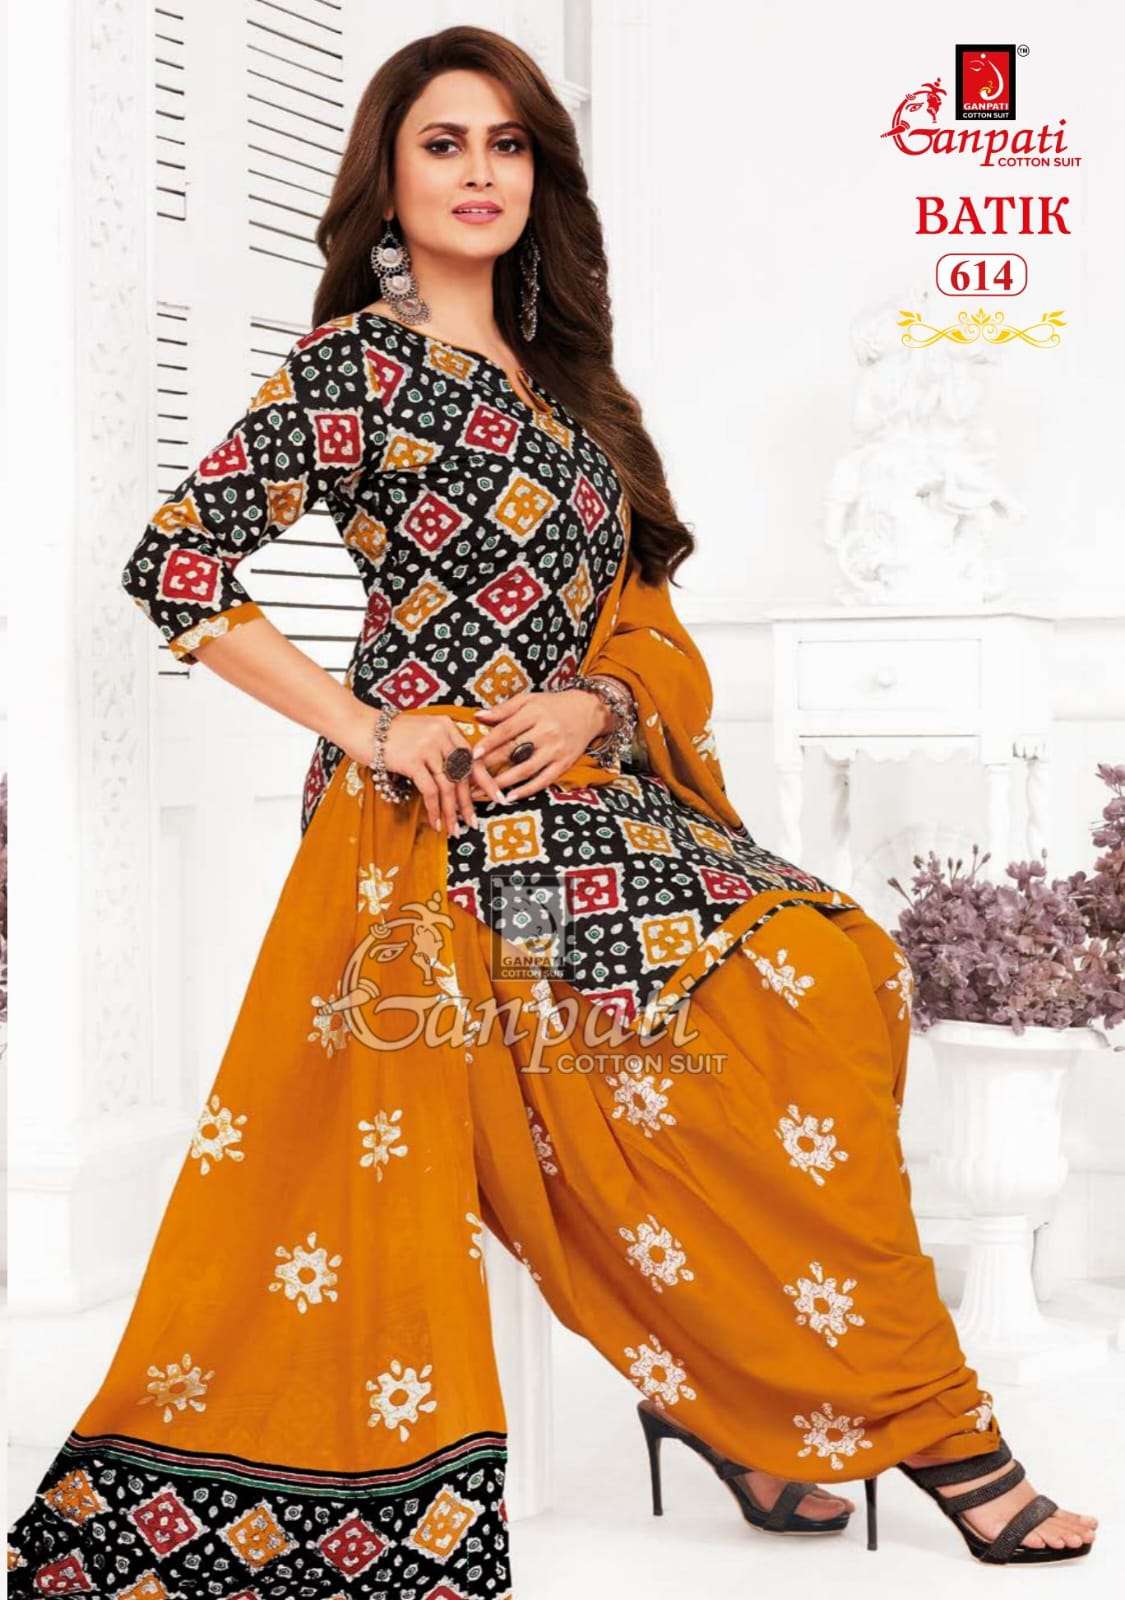 ganpati cotton suit batik vol-6 601-615 series punjabi style designer salwar suits catalogue manufacturer surat 